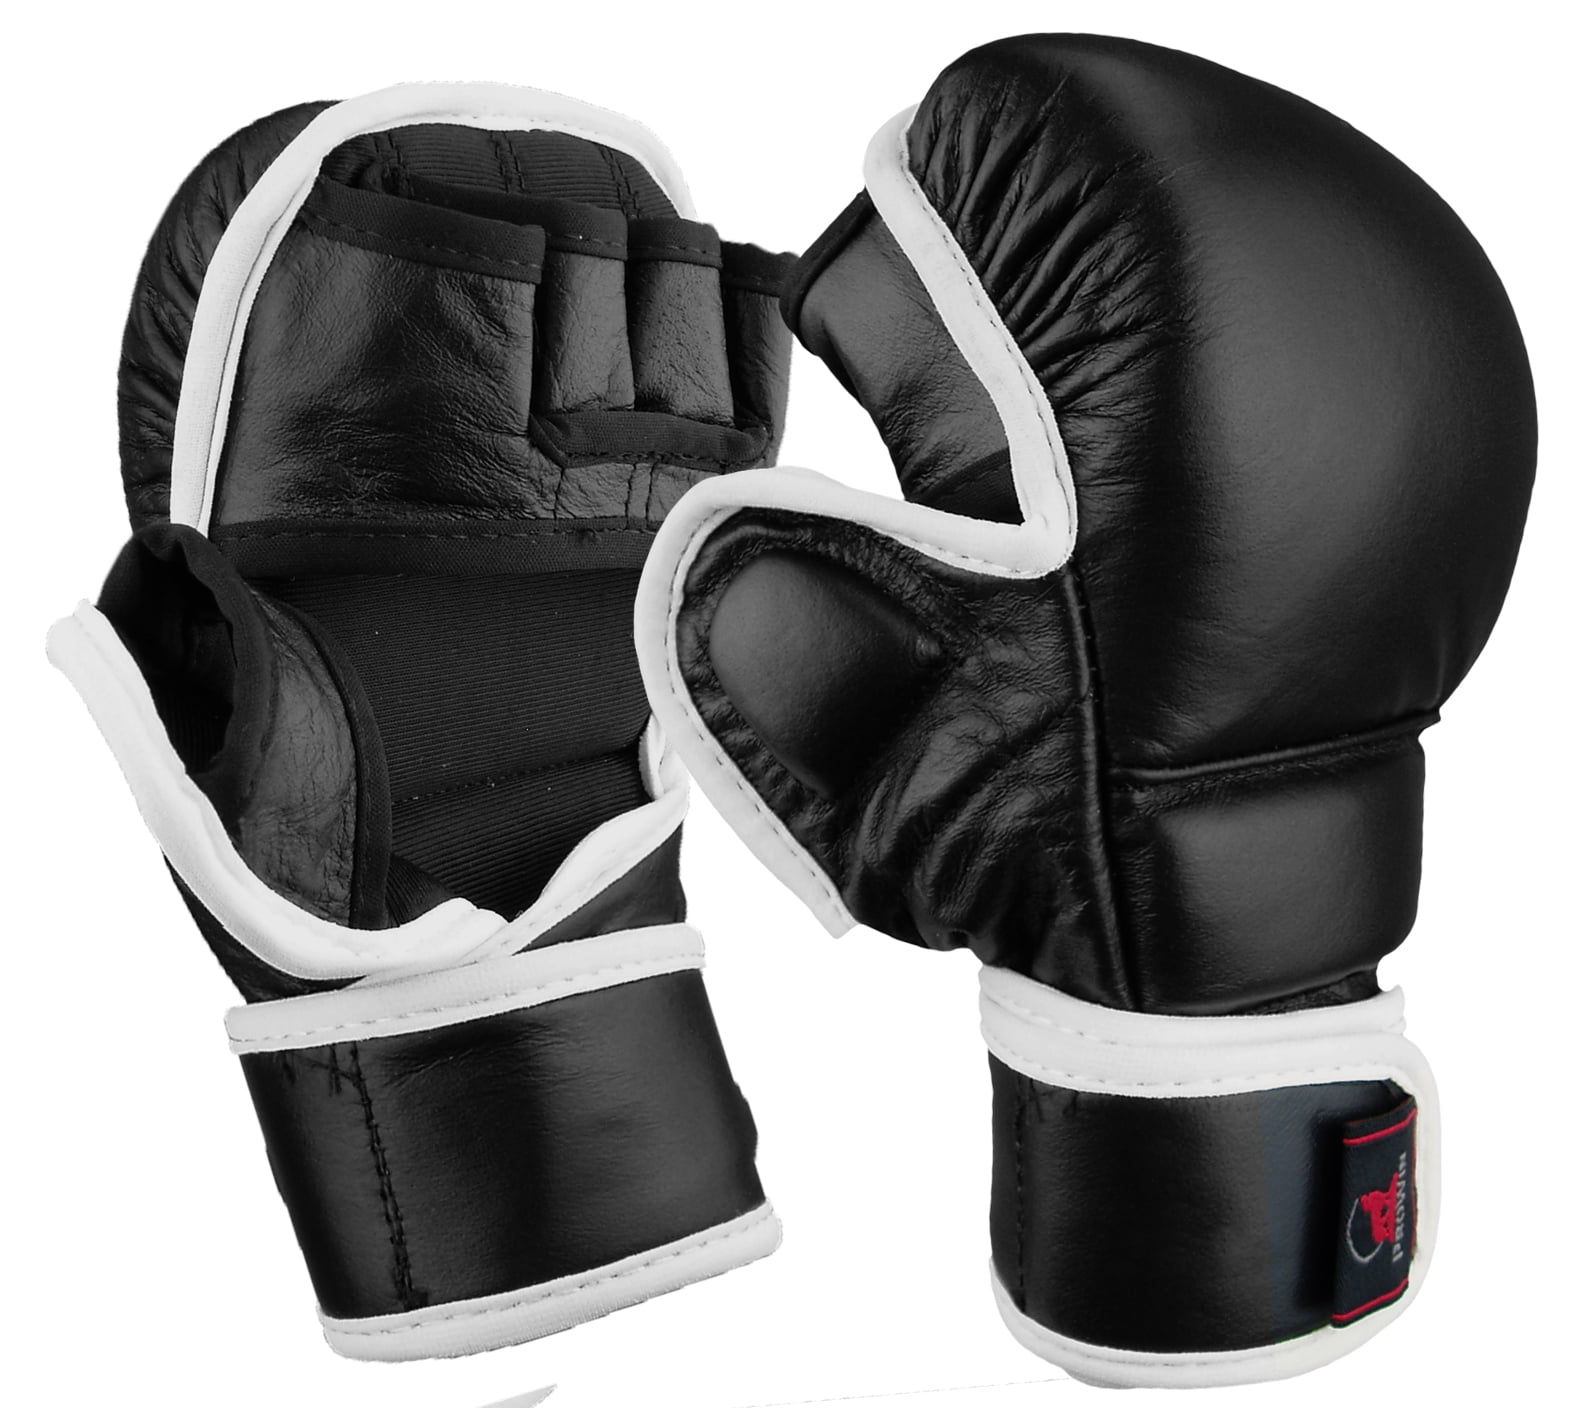 MMA Sporteq Leather Boxing Gloves Sparring Punch Bag Muay Thai Training Mitt 